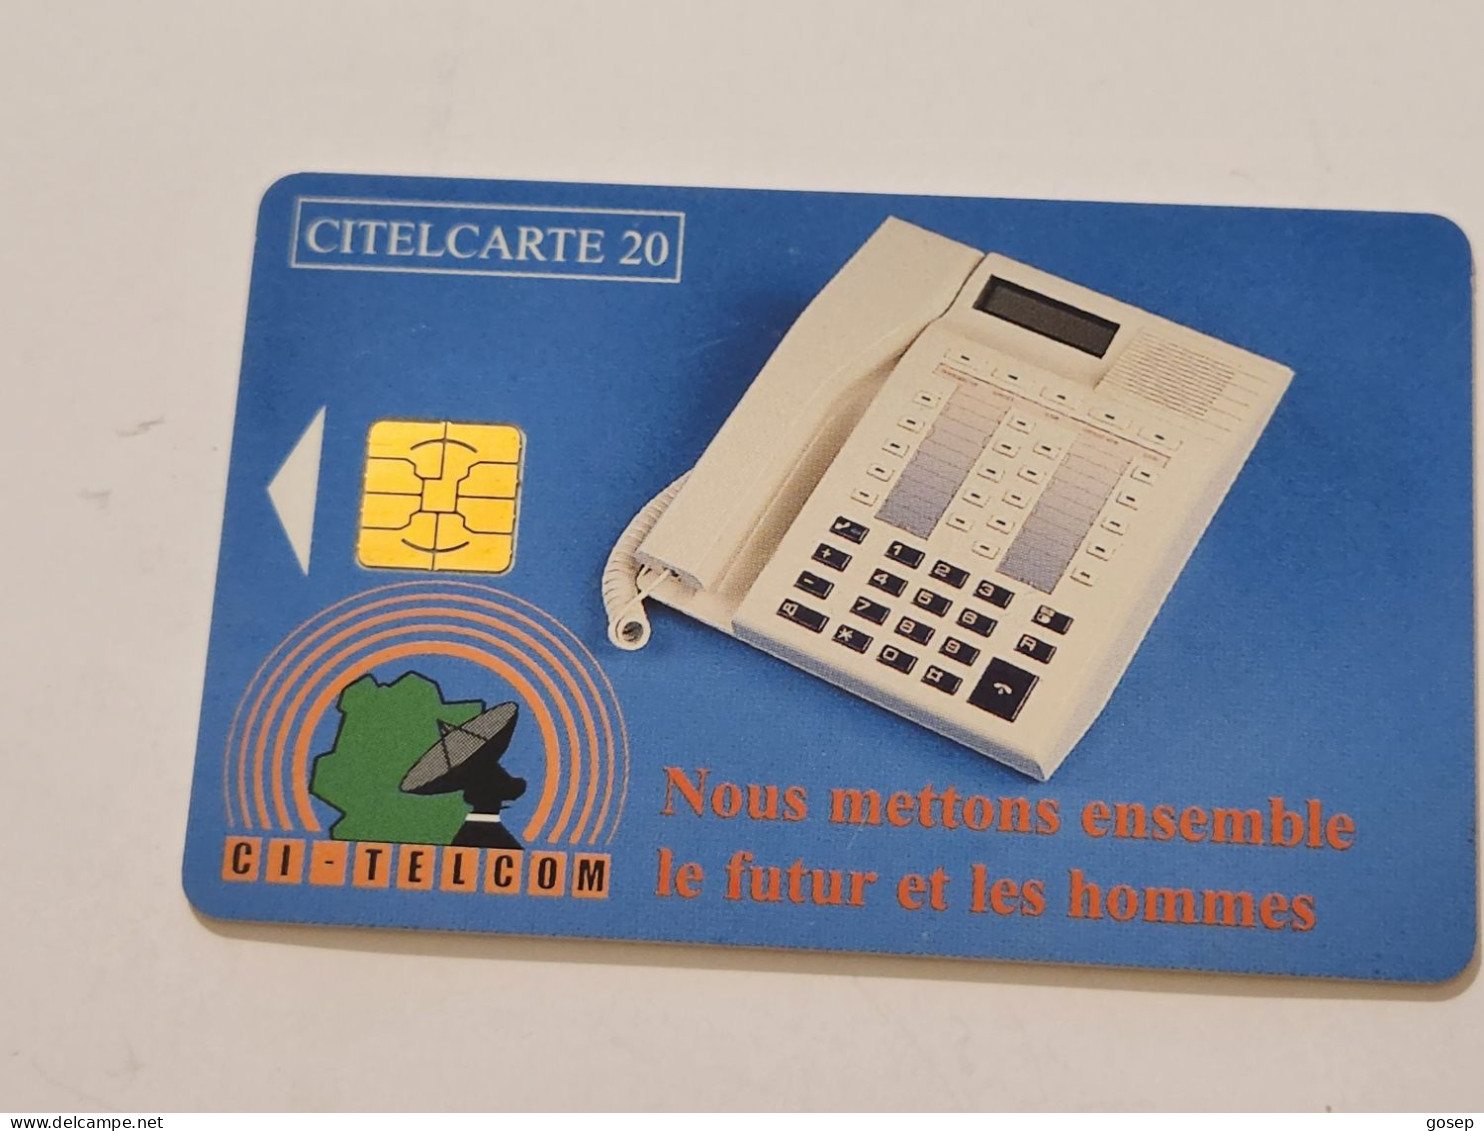 Ivory Coast-CI-CIT-0019)-telephone Nous-(33)-(20units)-(000188951)-(tirage-150.000)-used Card+1card Prepiad Free - Costa D'Avorio